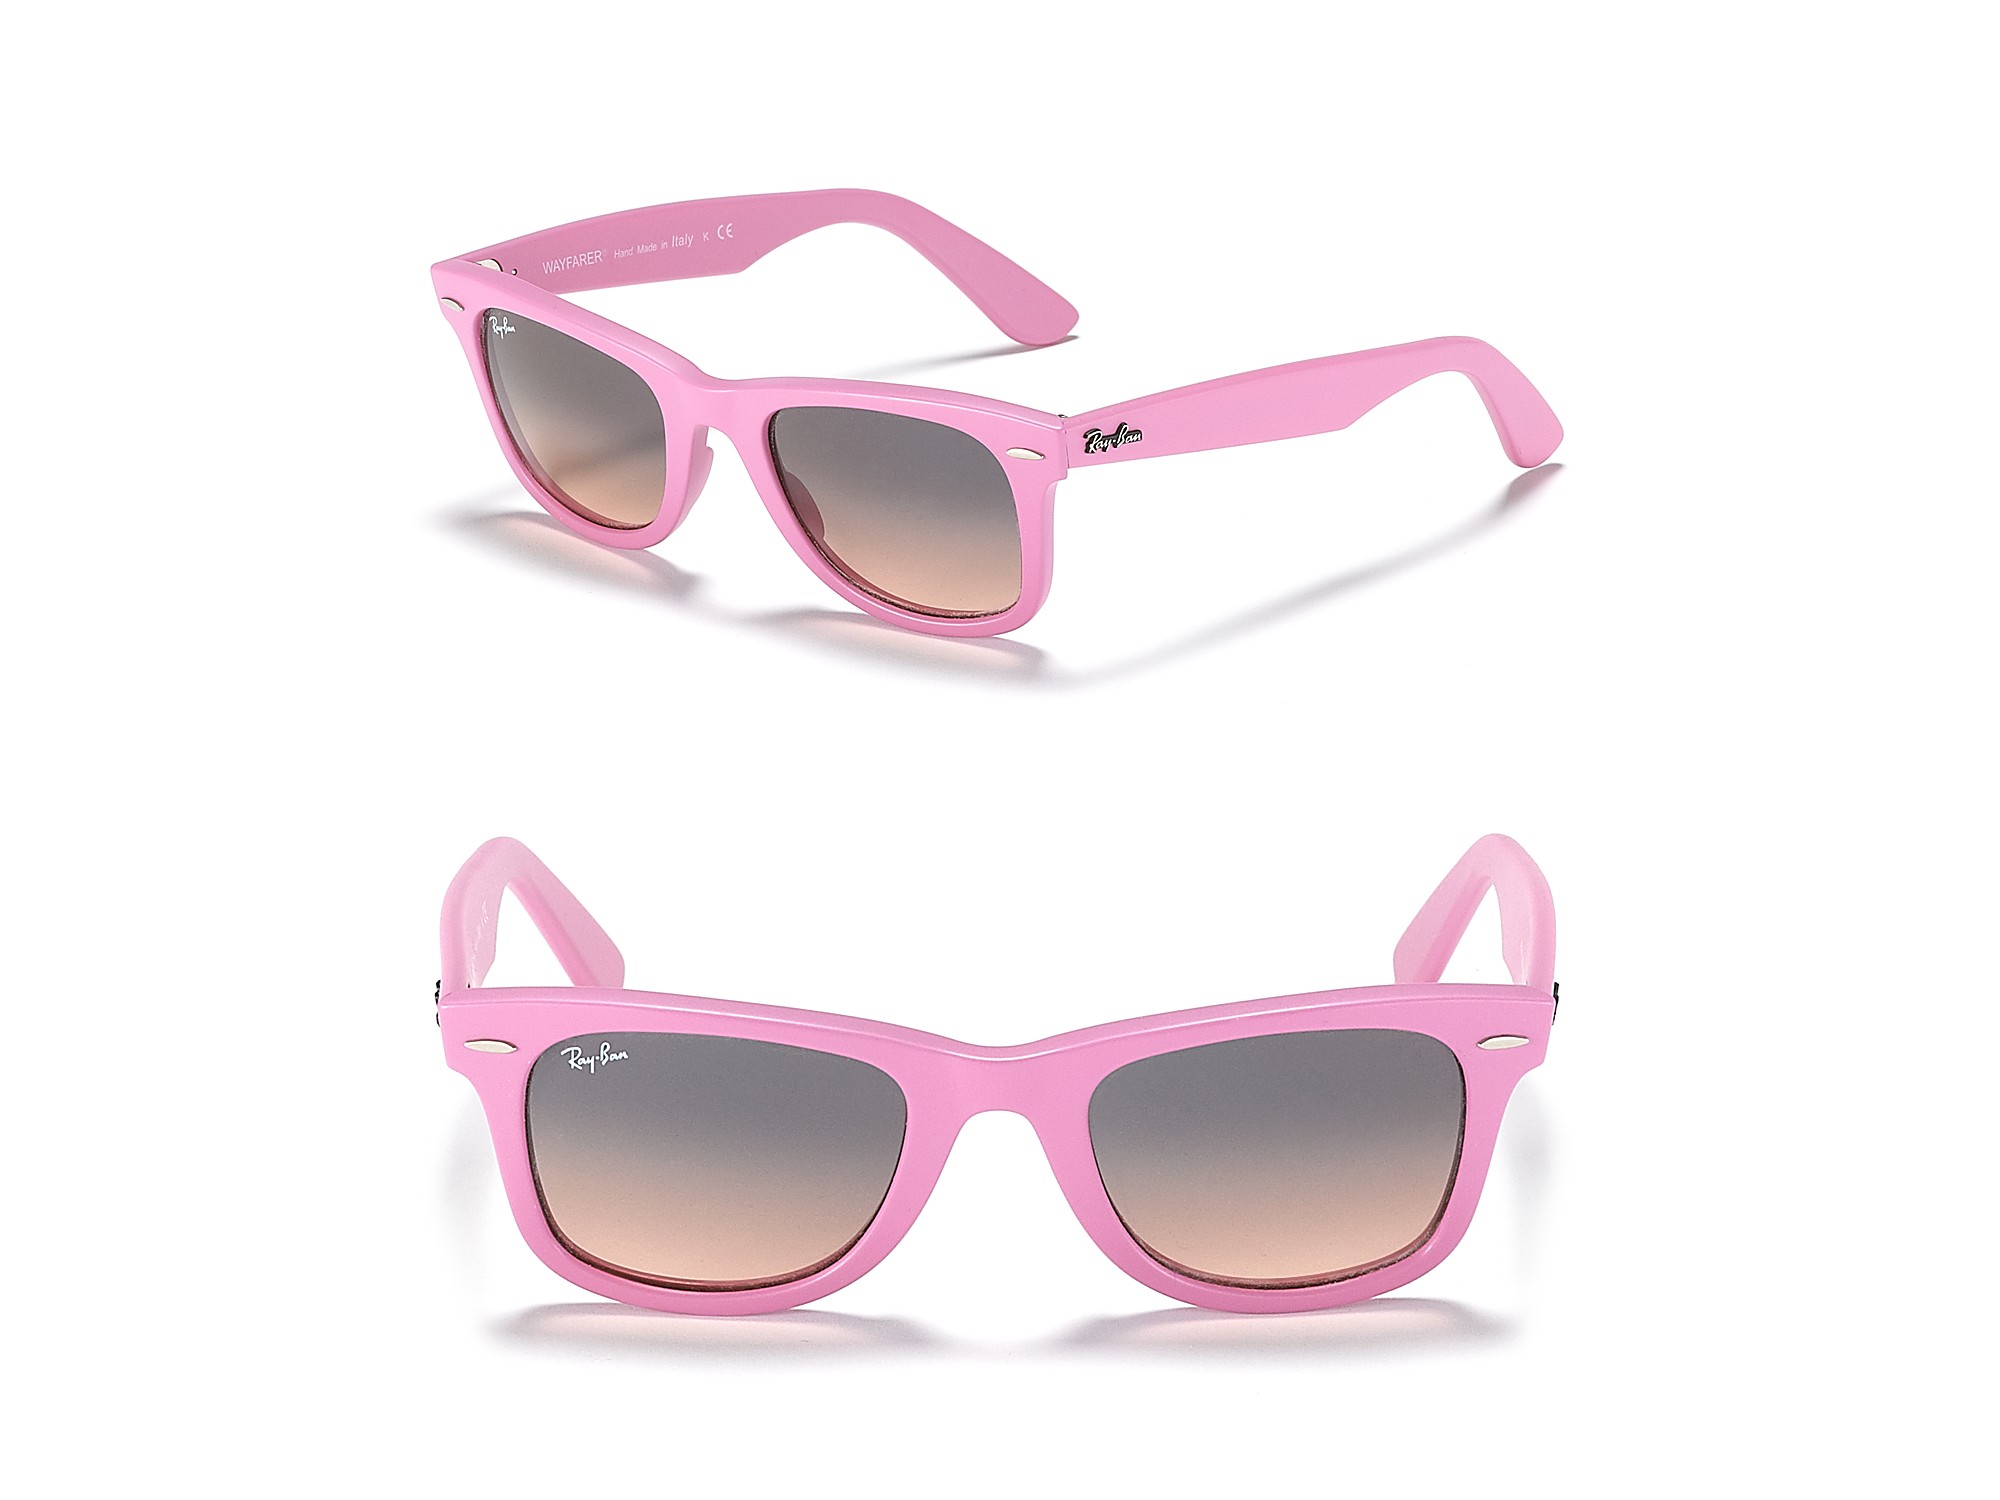 Ray-Ban Classic Wayfarer Sunglasses in Pink - Lyst